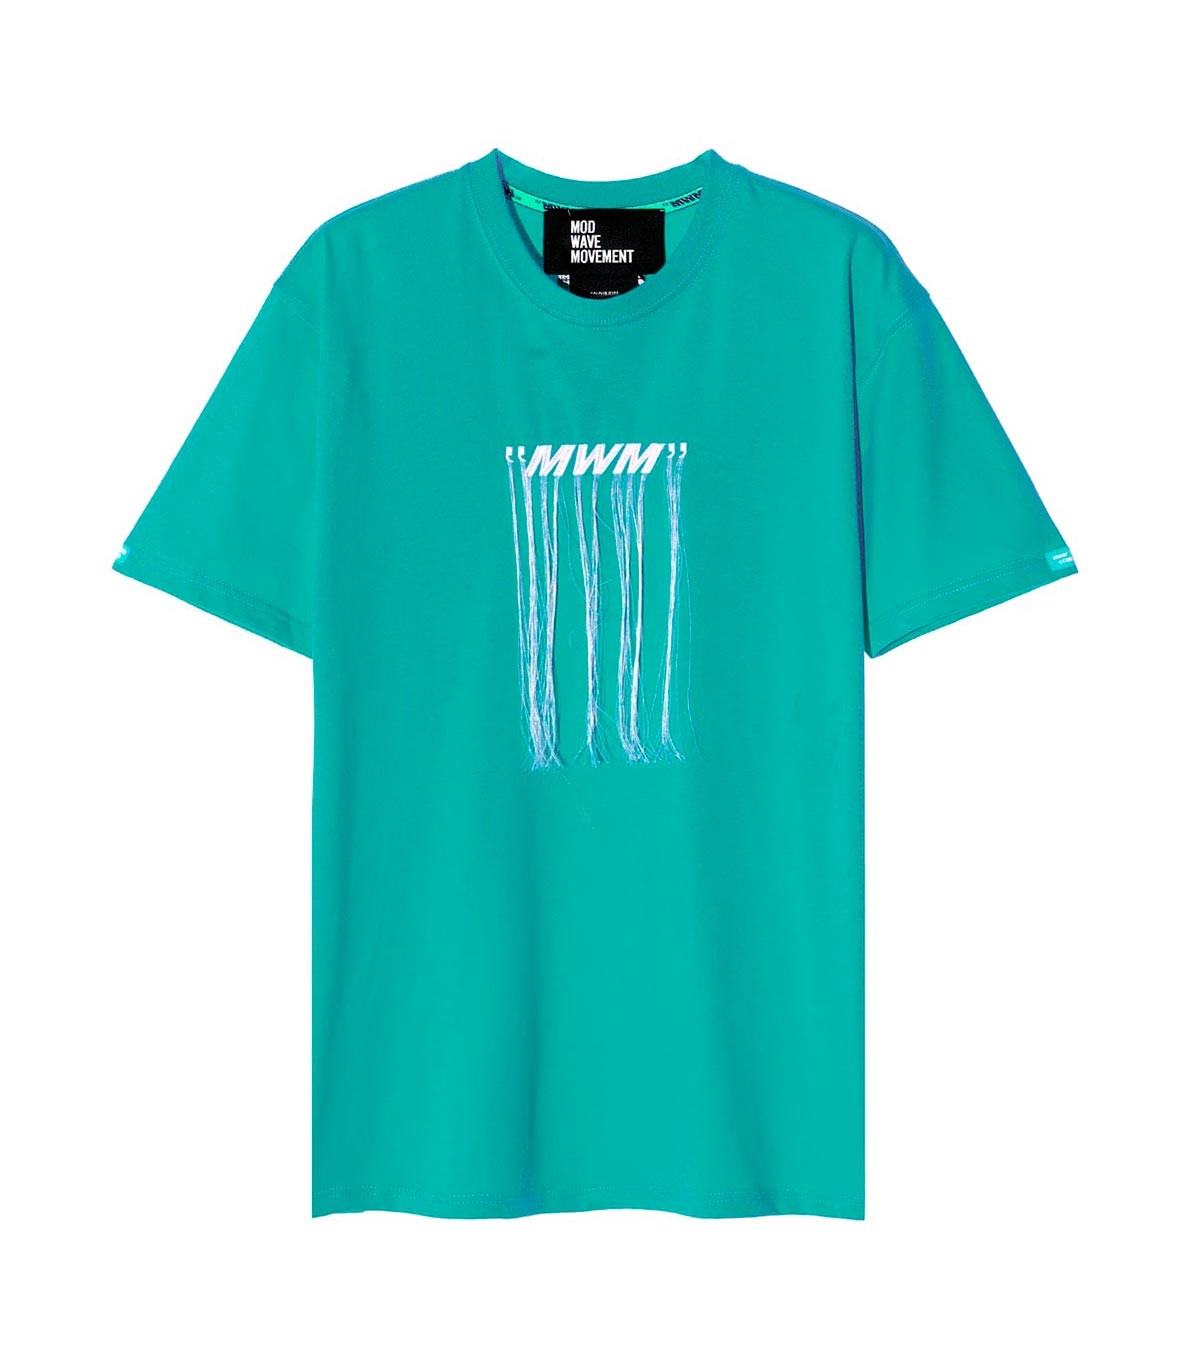 Mod Wave Movement - Camiseta Wings Capsule - Verde